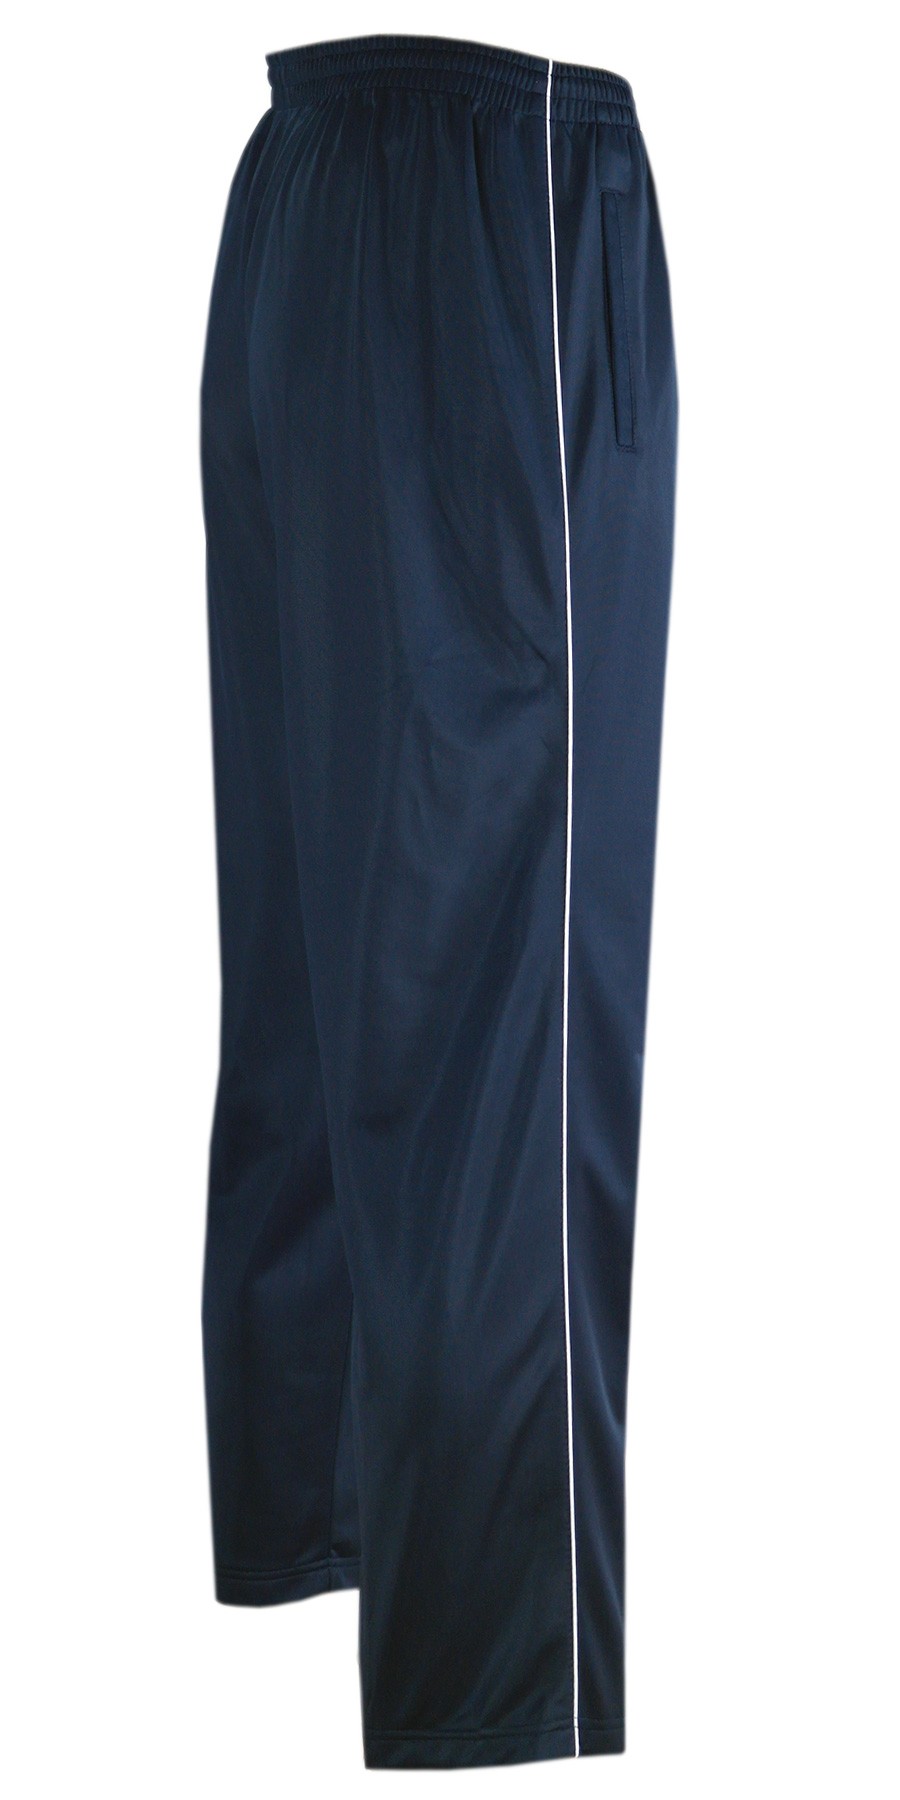 Glänzende Sporthose Herren Freizeit- Jogginghose in Kurzgrößen - dunkelblau